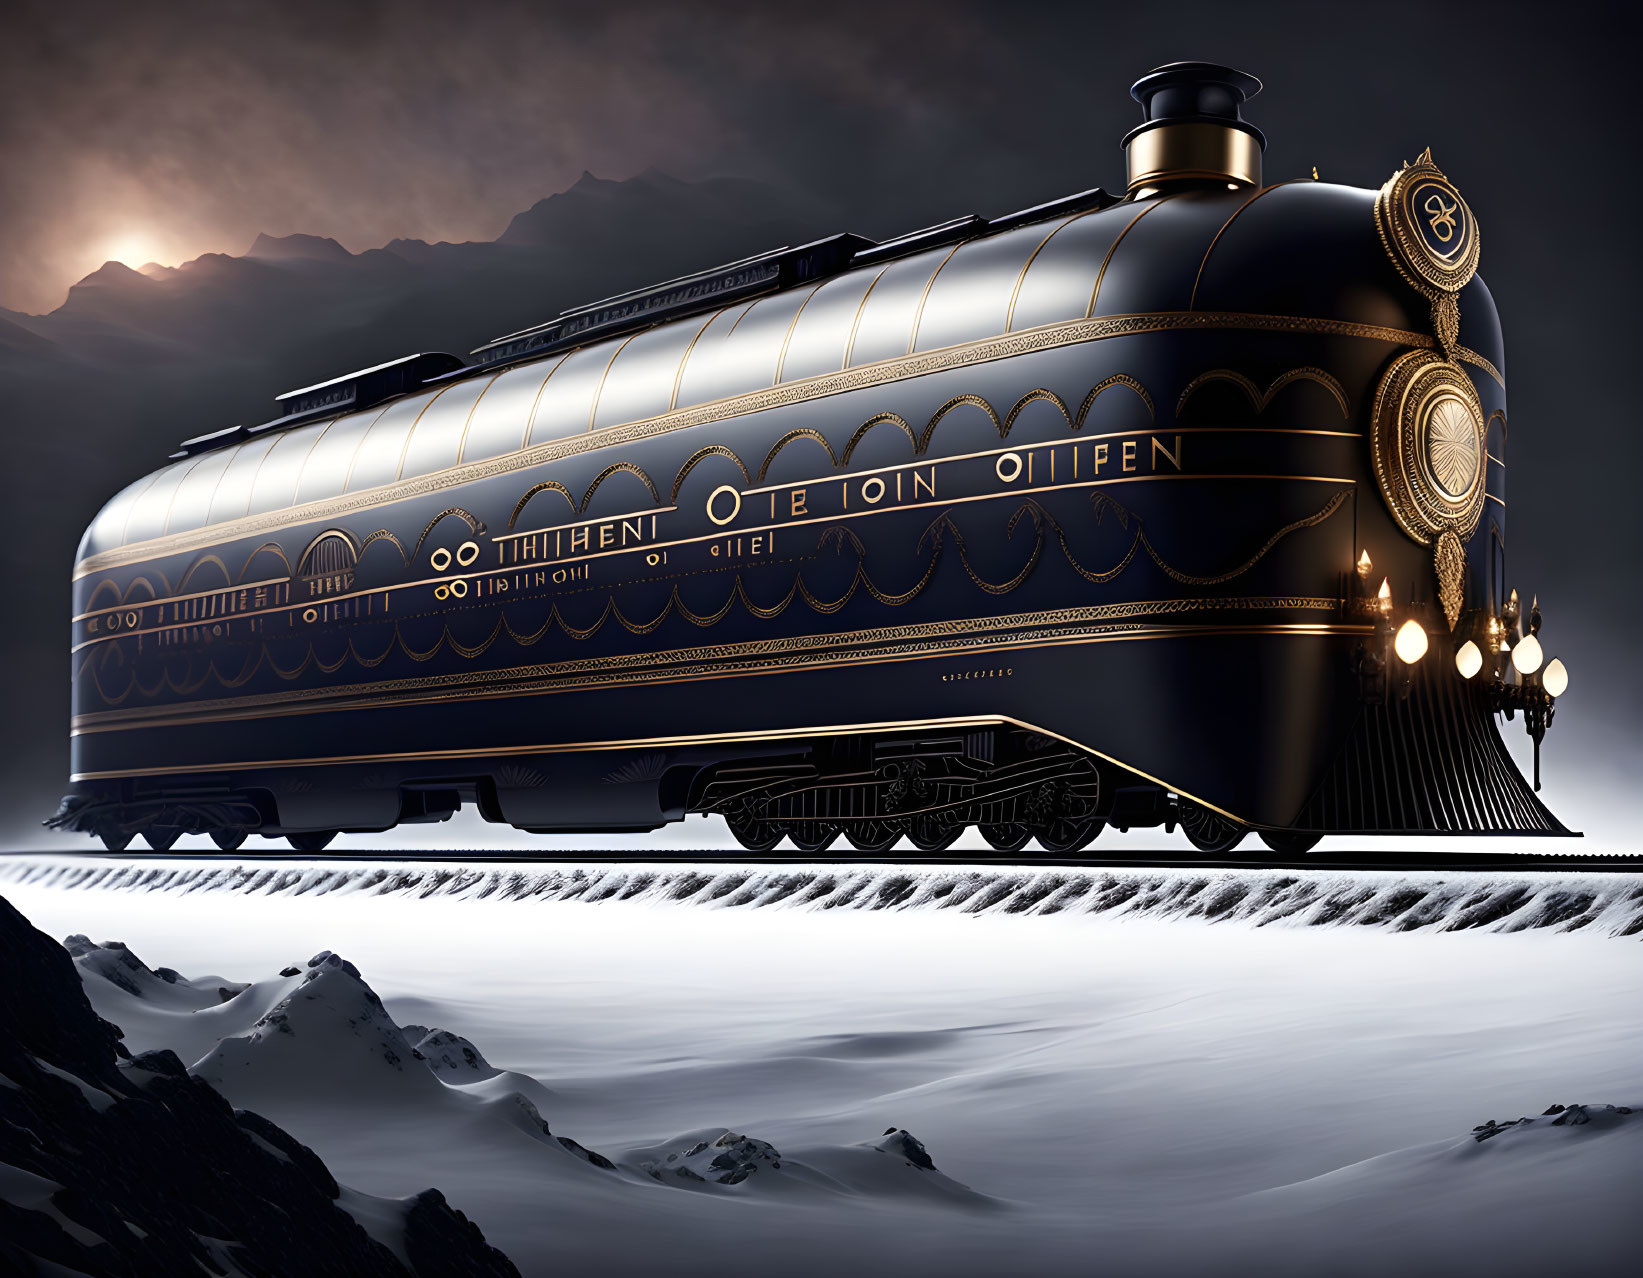 Black retro-futuristic train with golden details speeding through snowy landscape